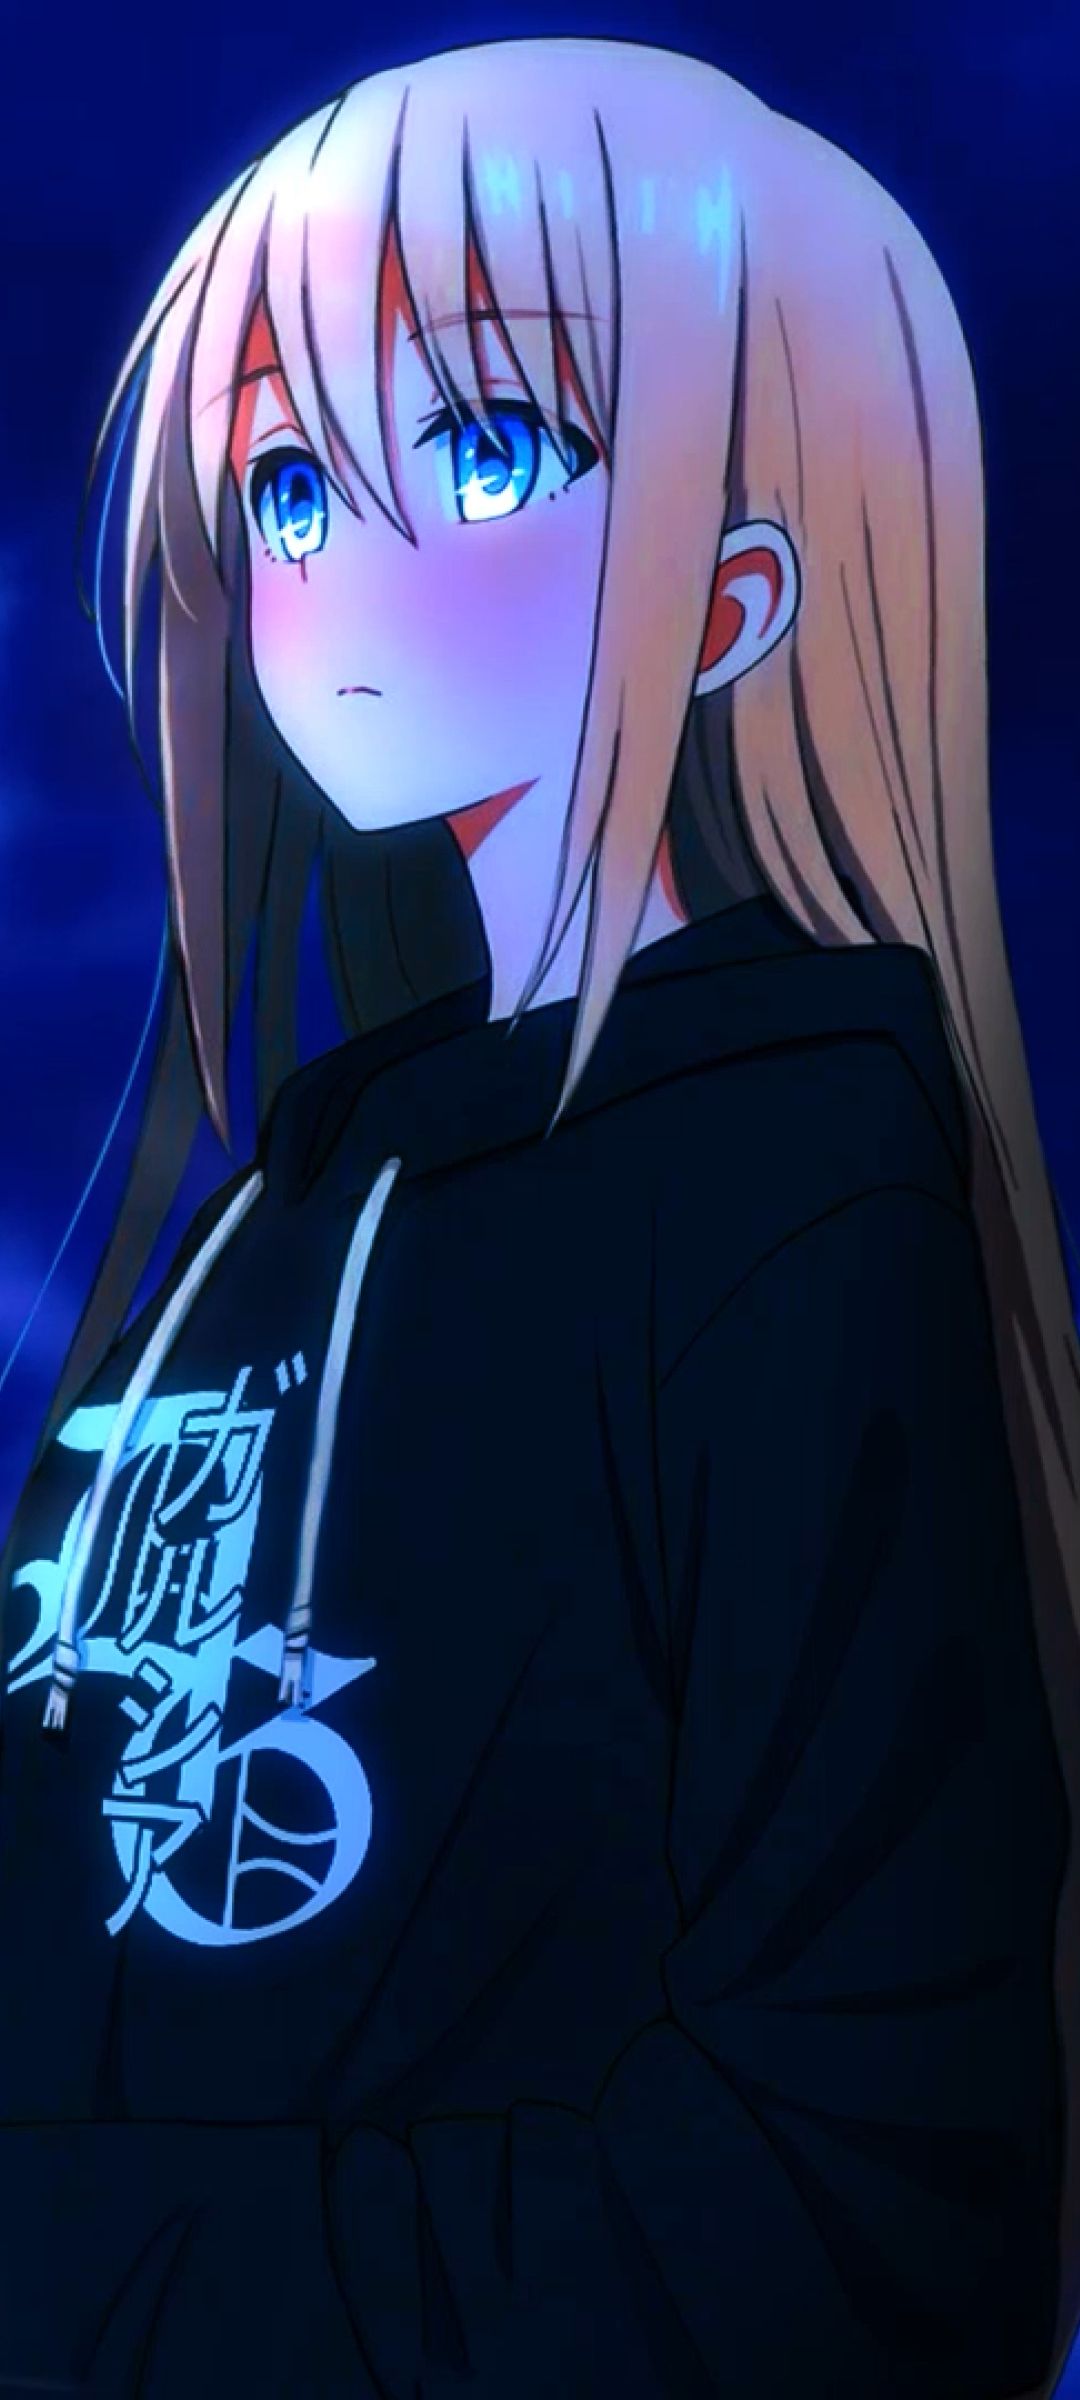 Blonde Blue Eye Anime Girl 1080x2400 Resolution Wallpaper, HD Anime 4K Wallpaper, Image, Photo and Background